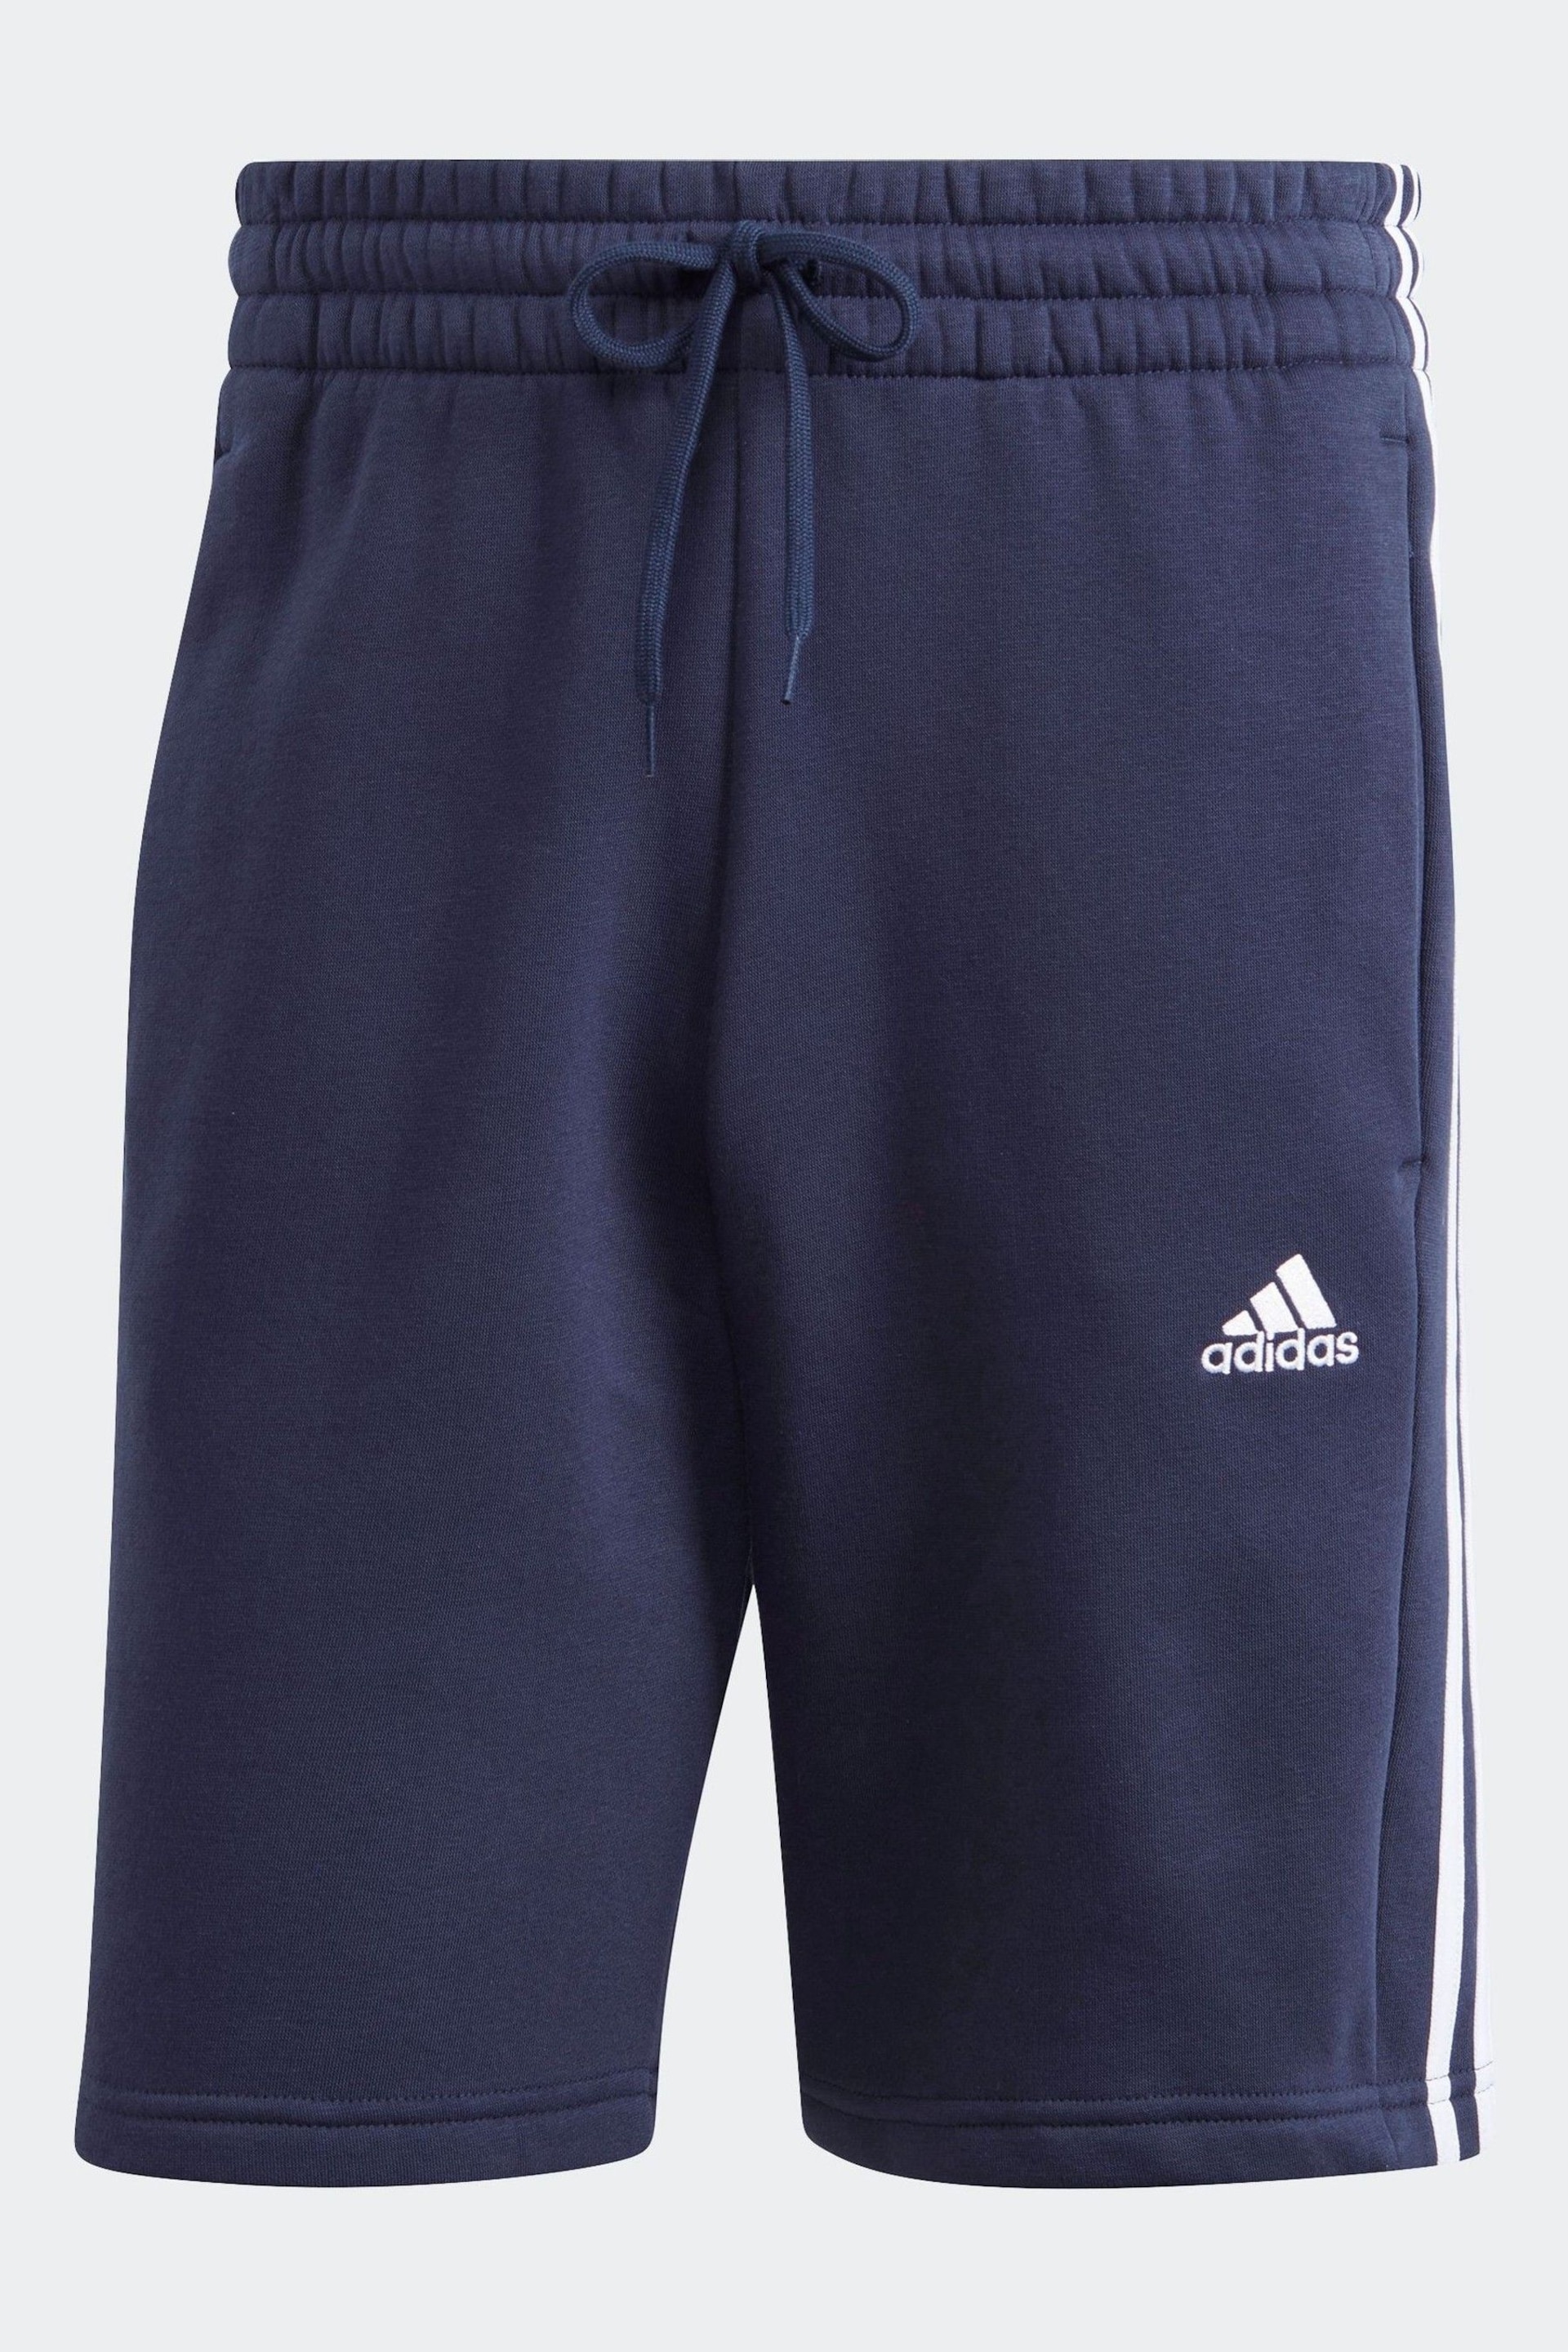 adidas Blue Sportswear Essentials Fleece 3-Stripes Shorts - Image 5 of 5